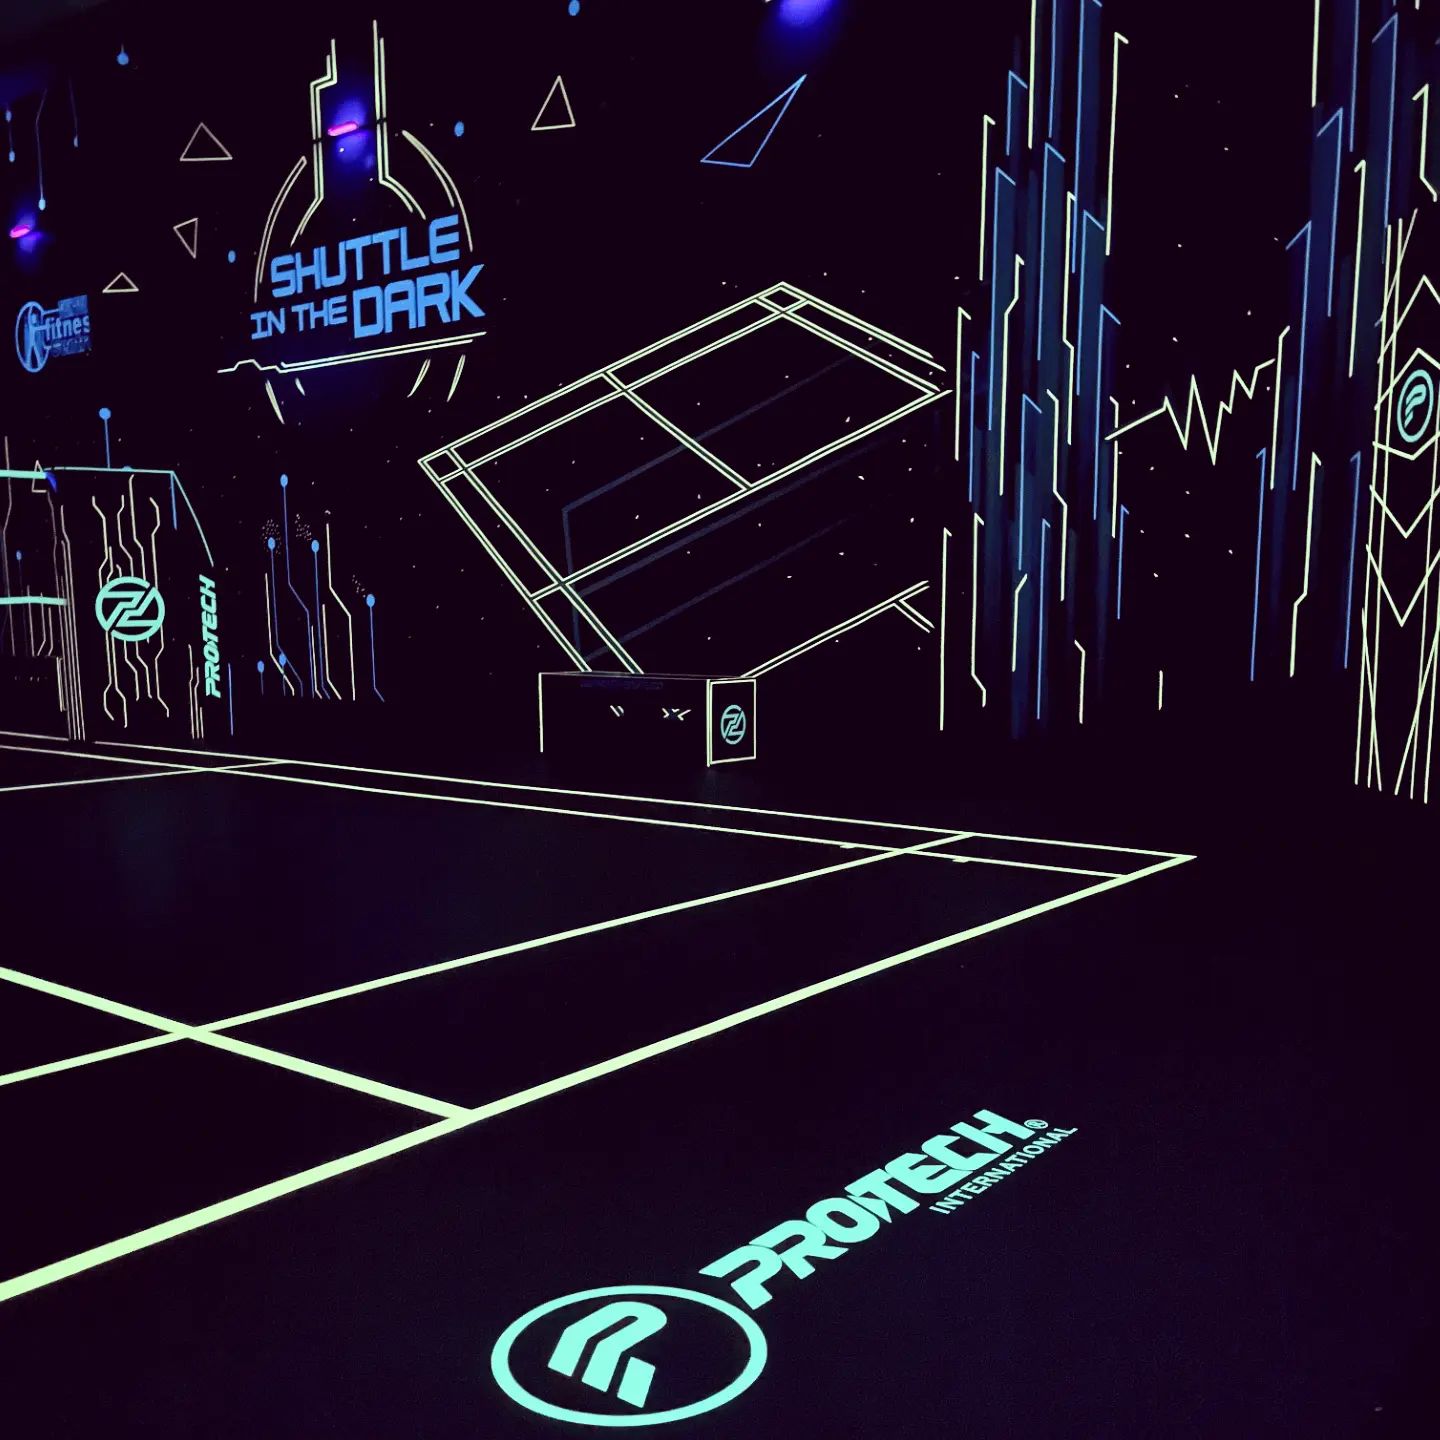 Shuttle In The Dark - Badminton court